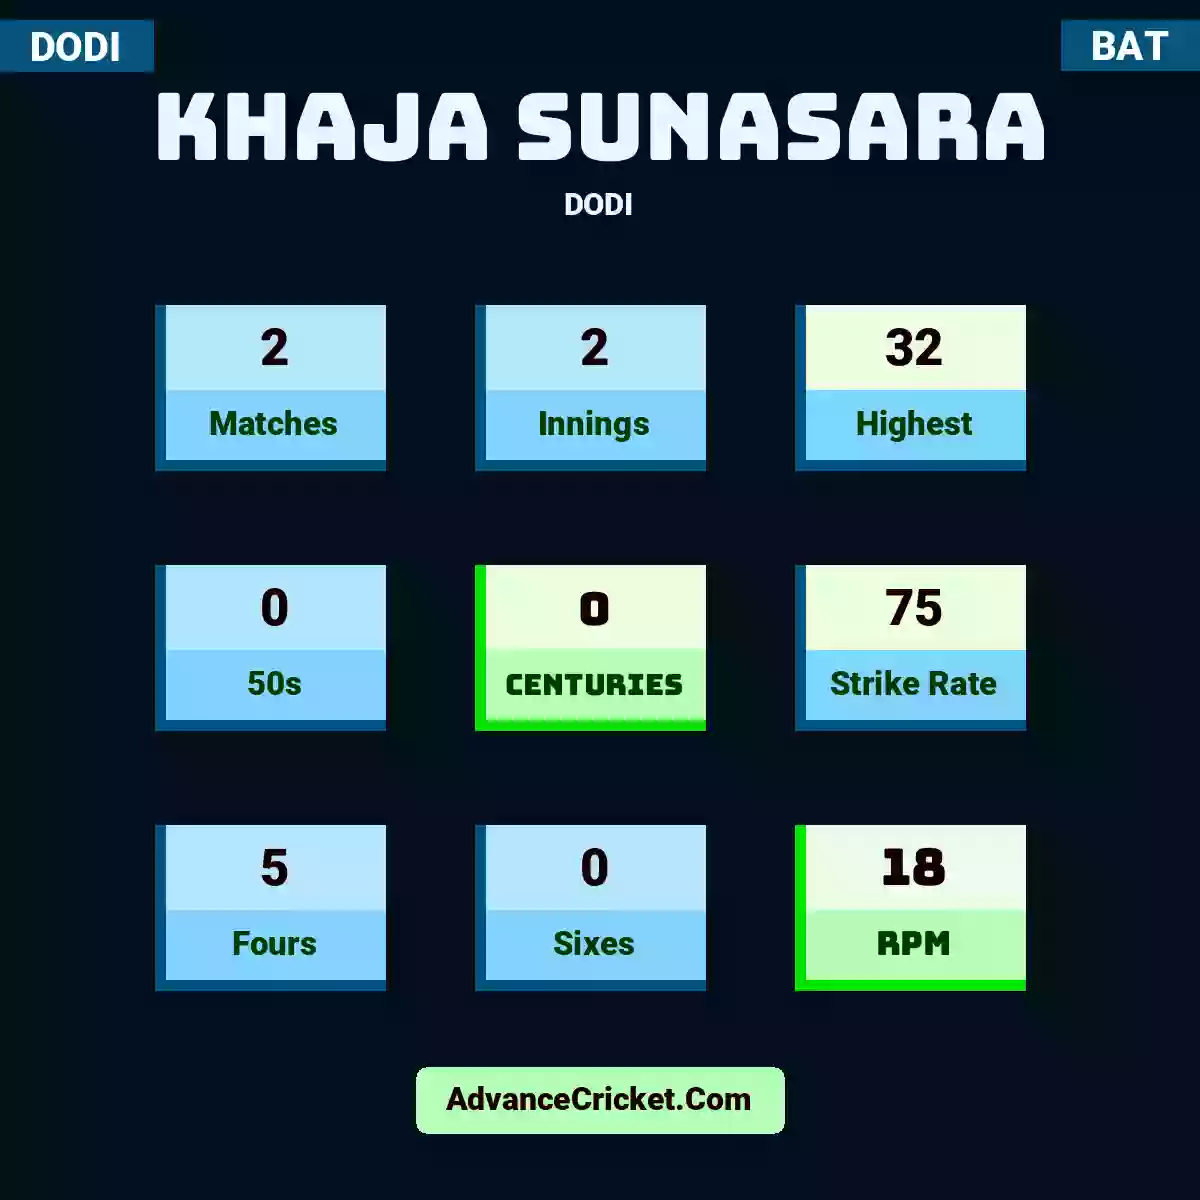 Khaja Sunasara DODI , Khaja Sunasara played 2 matches, scored 32 runs as highest, 0 half-centuries, and 0 centuries, with a strike rate of 75. K.Sunasara hit 5 fours and 0 sixes, with an RPM of 18.